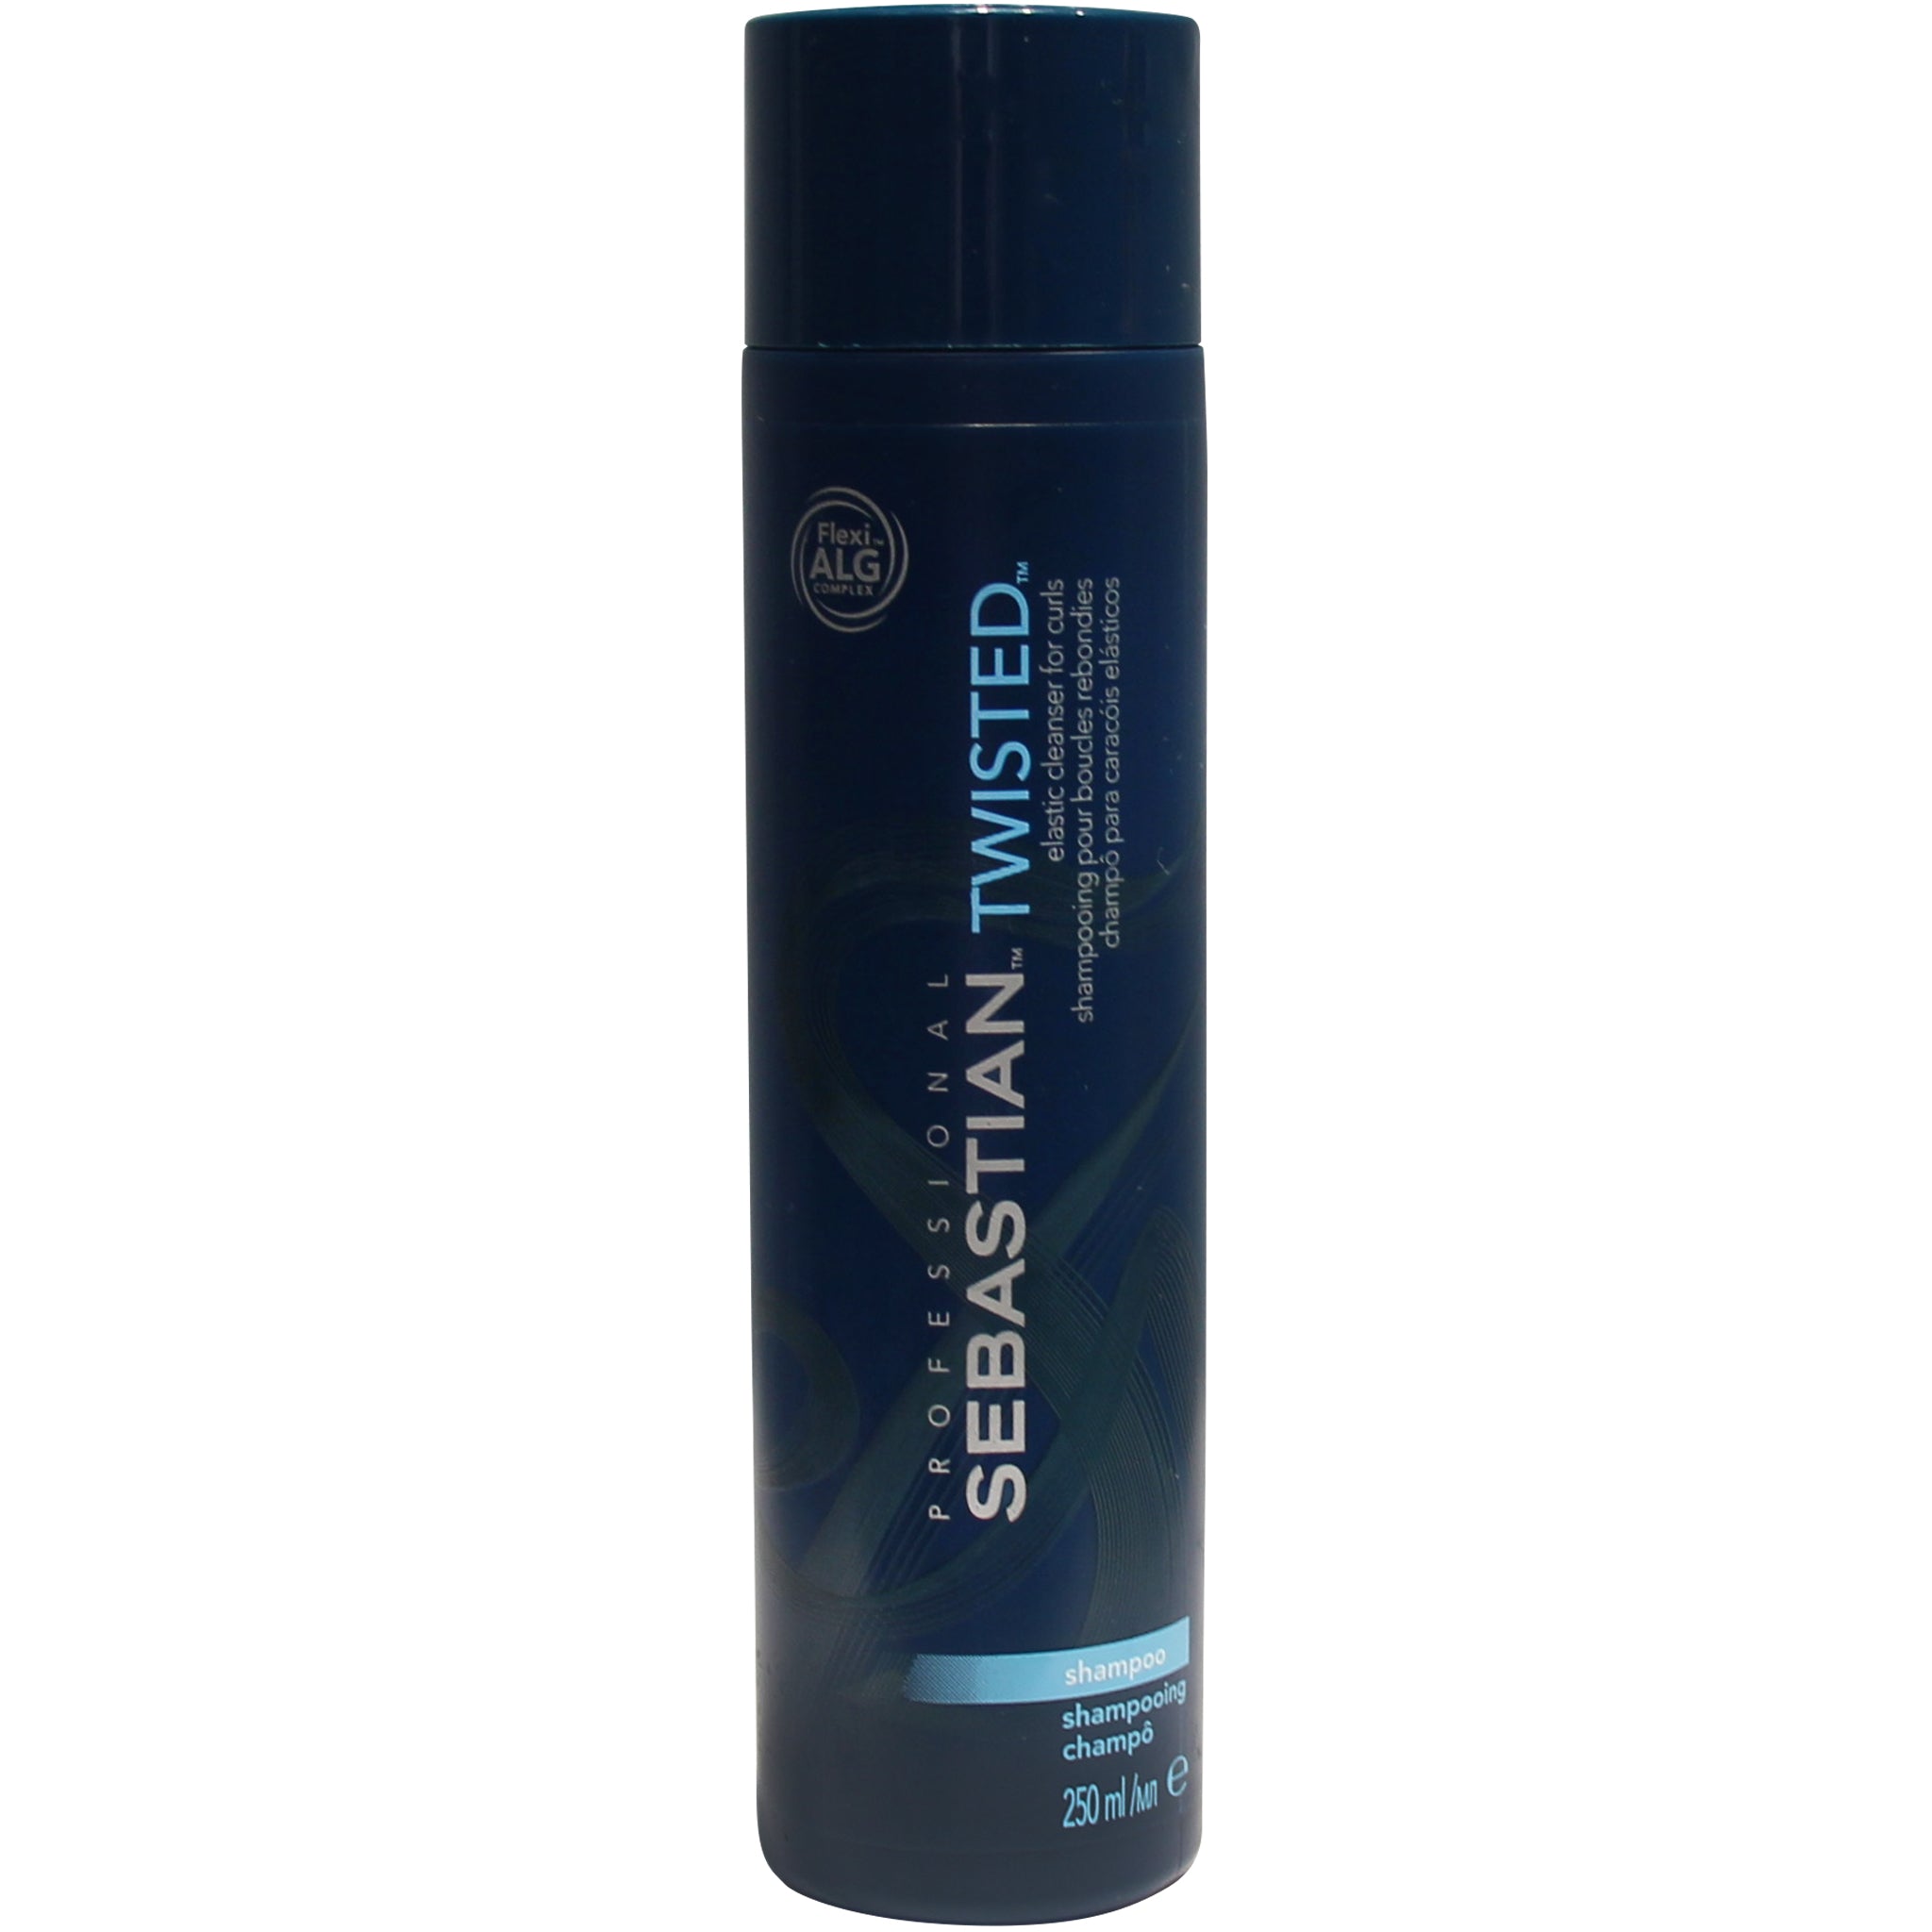 SEB Curl Elastic Cleanser Shampoo 250ml - Champú para cabello rizado y ondulado